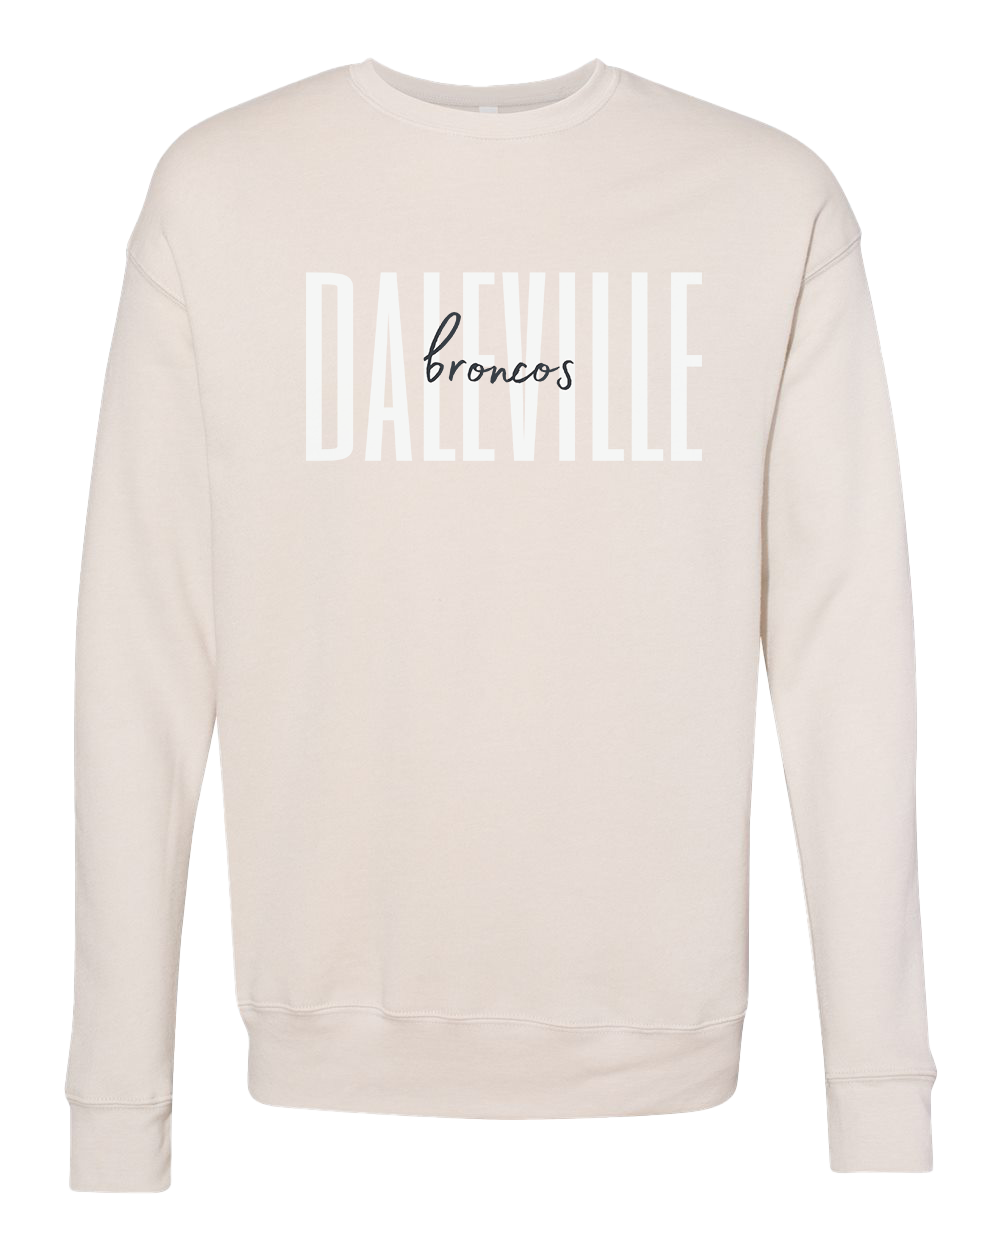 Daleville Broncos Script Crew Sweatshirt - Heather Dust